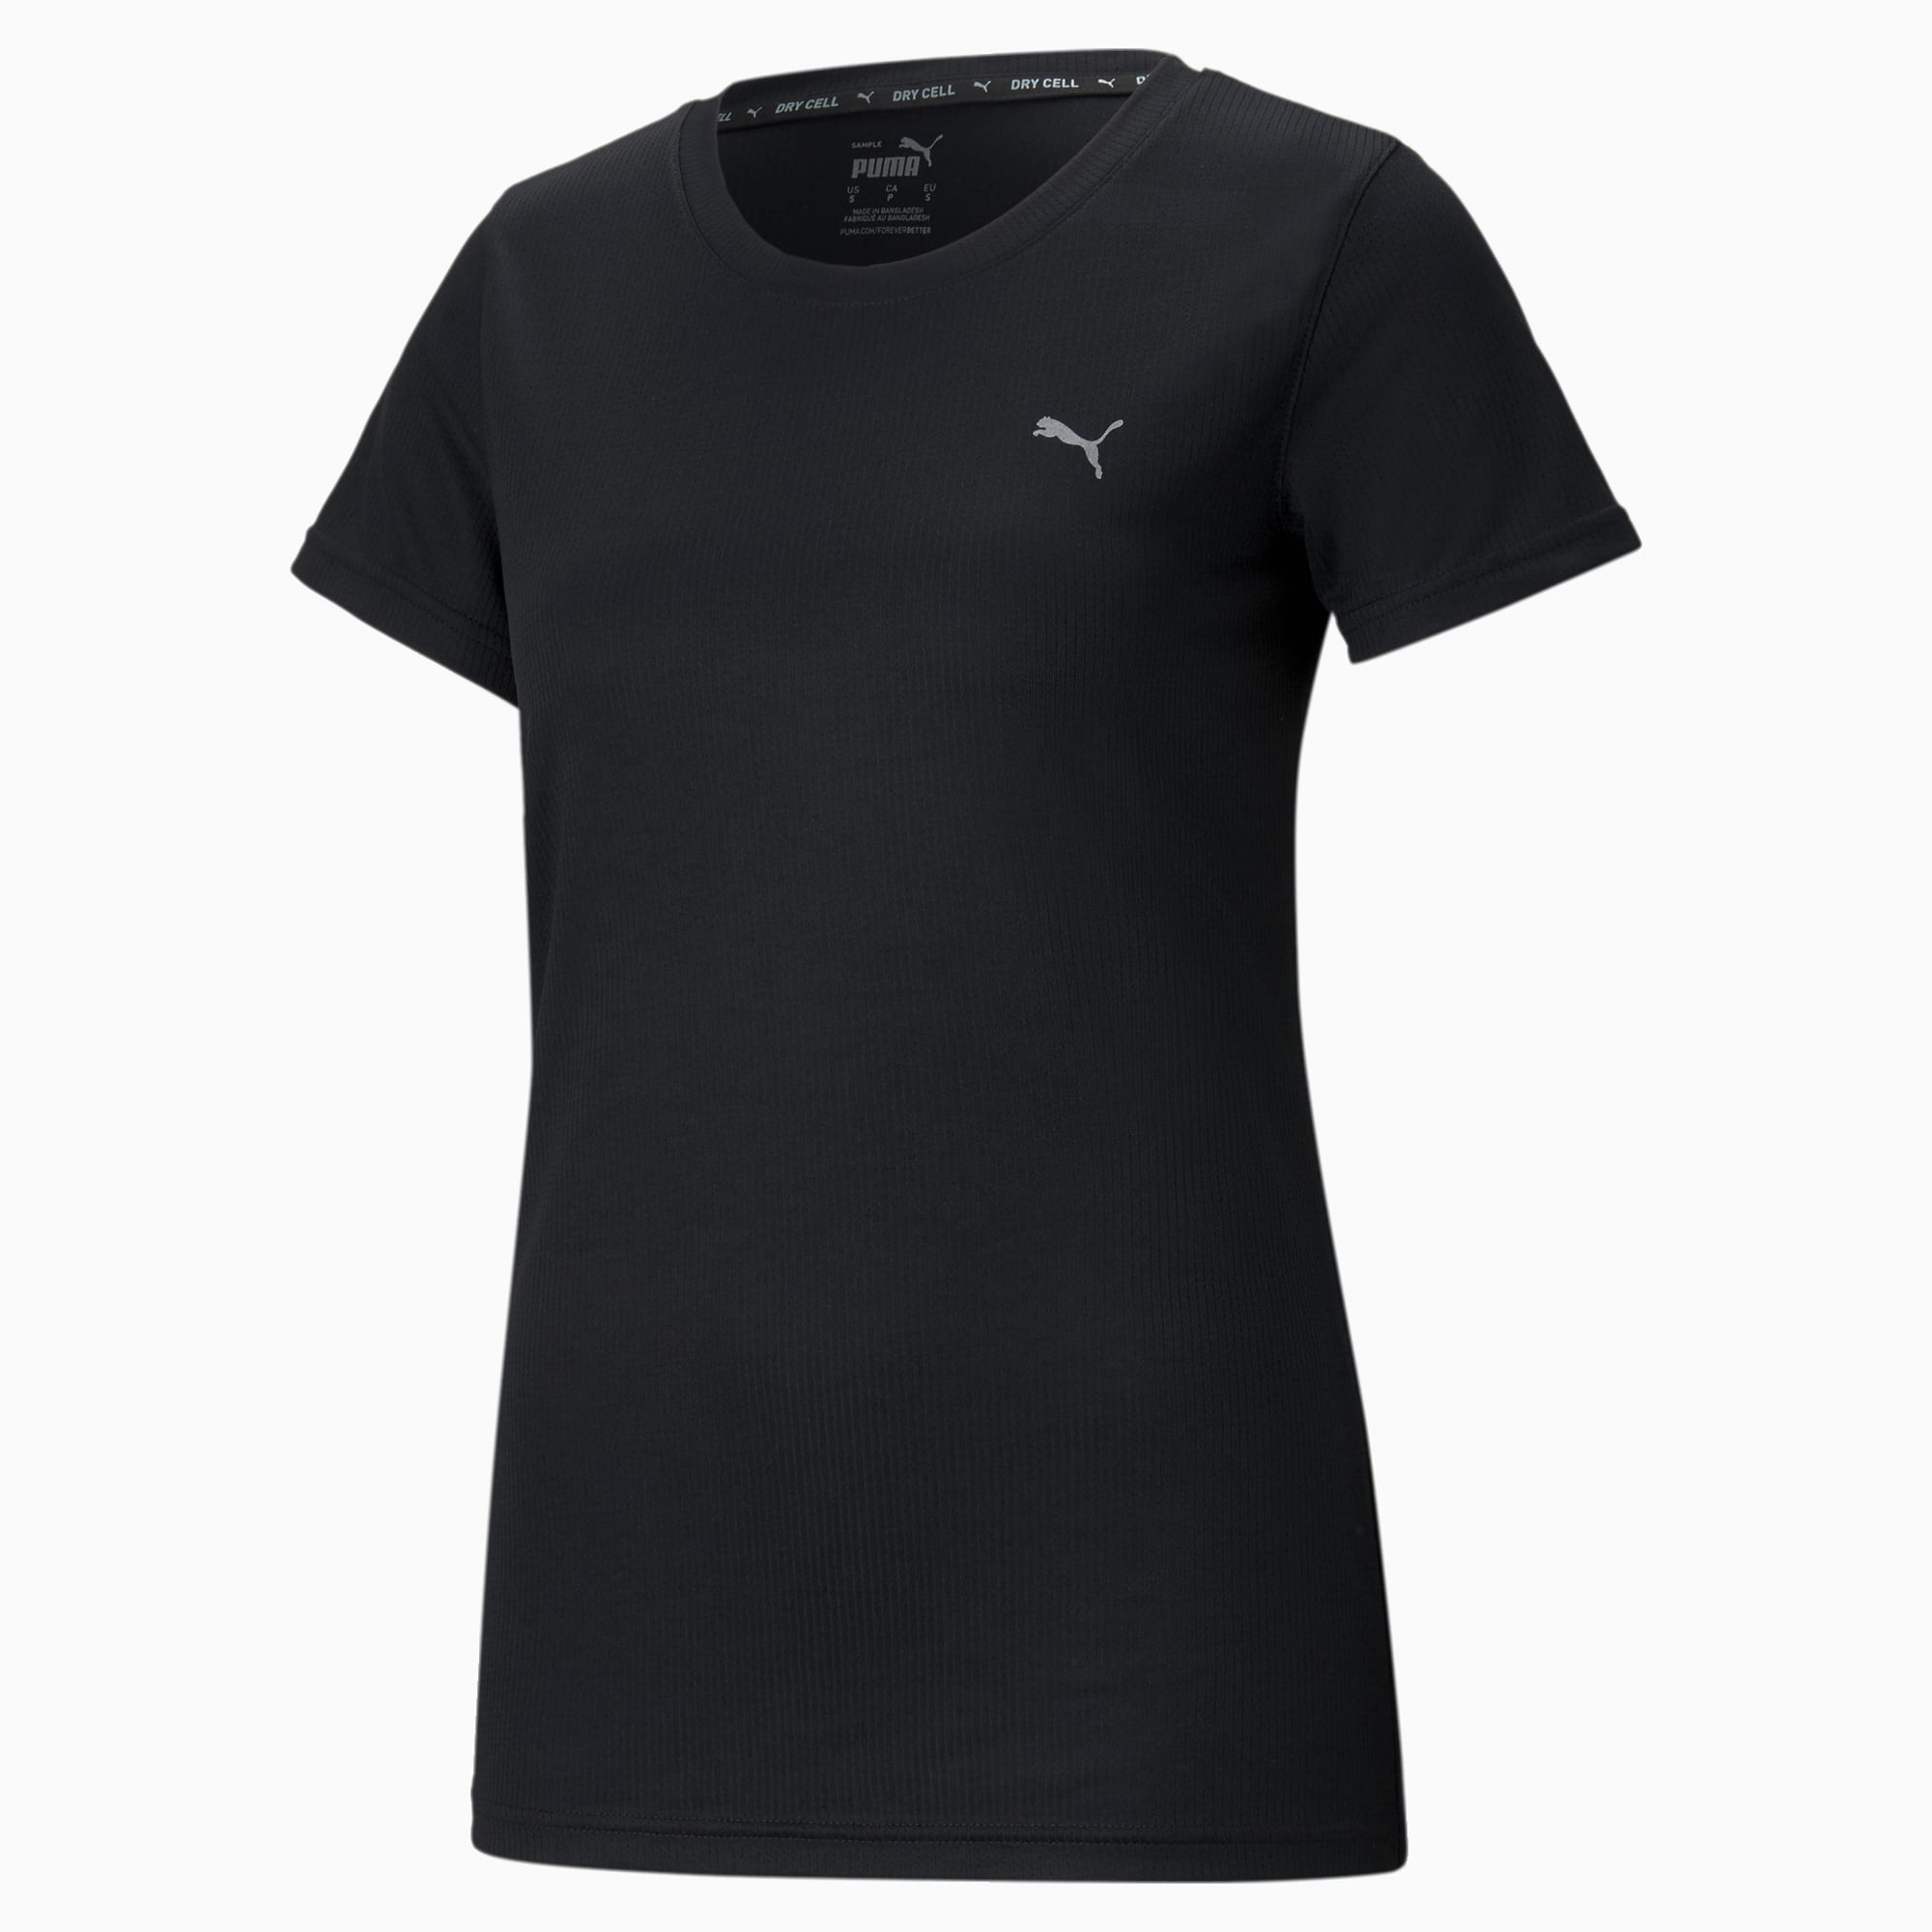 PUMA Performance Women's Training T-Shirt, Black, Size L, Clothing